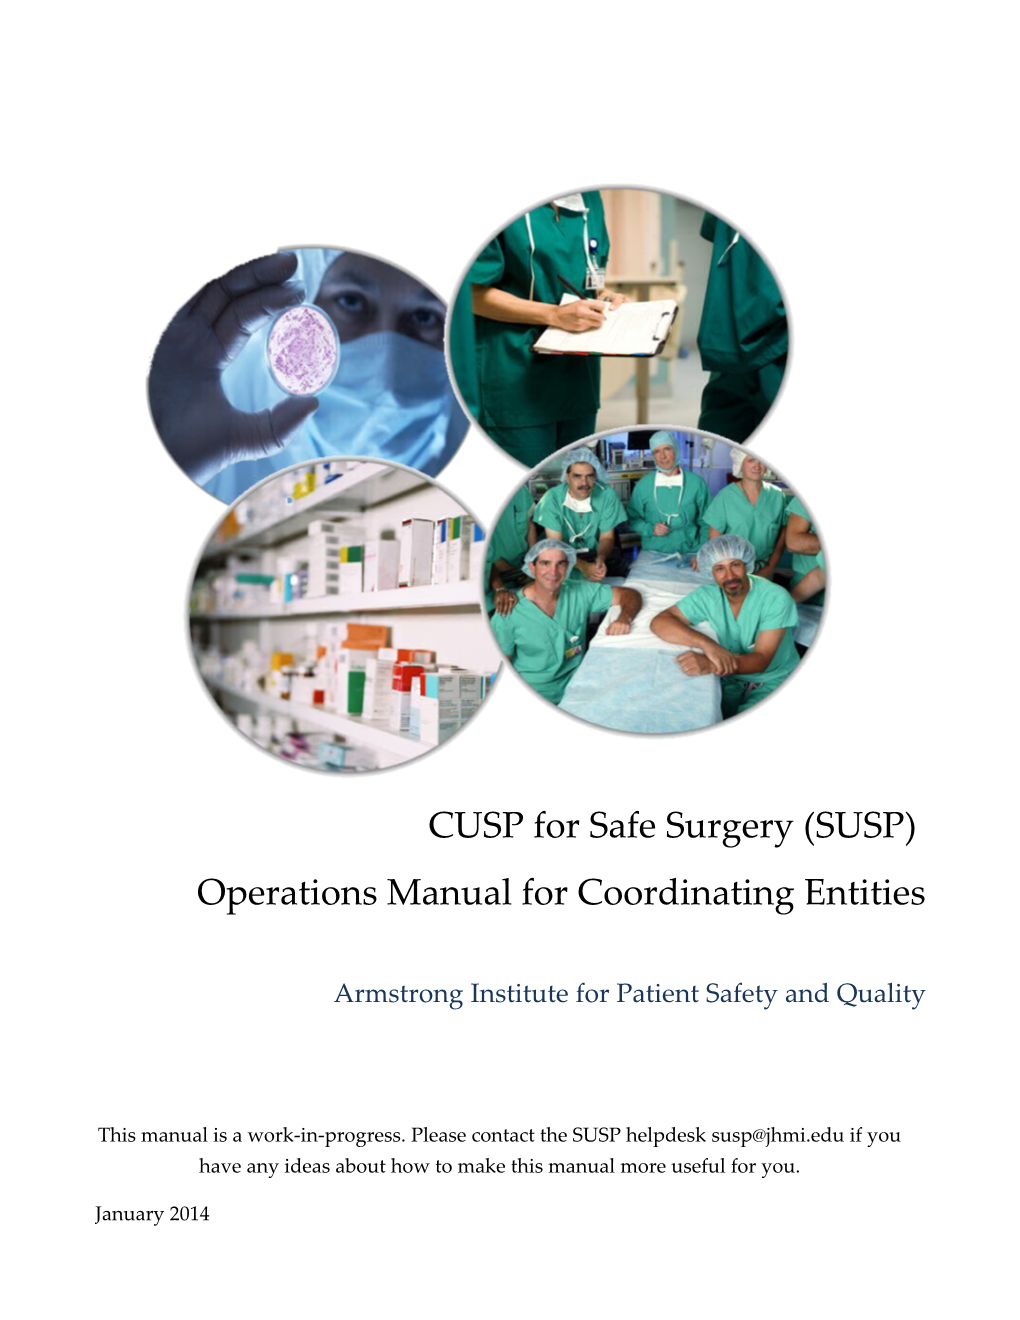 State Hospital Association Project Coordinators Operational Manual